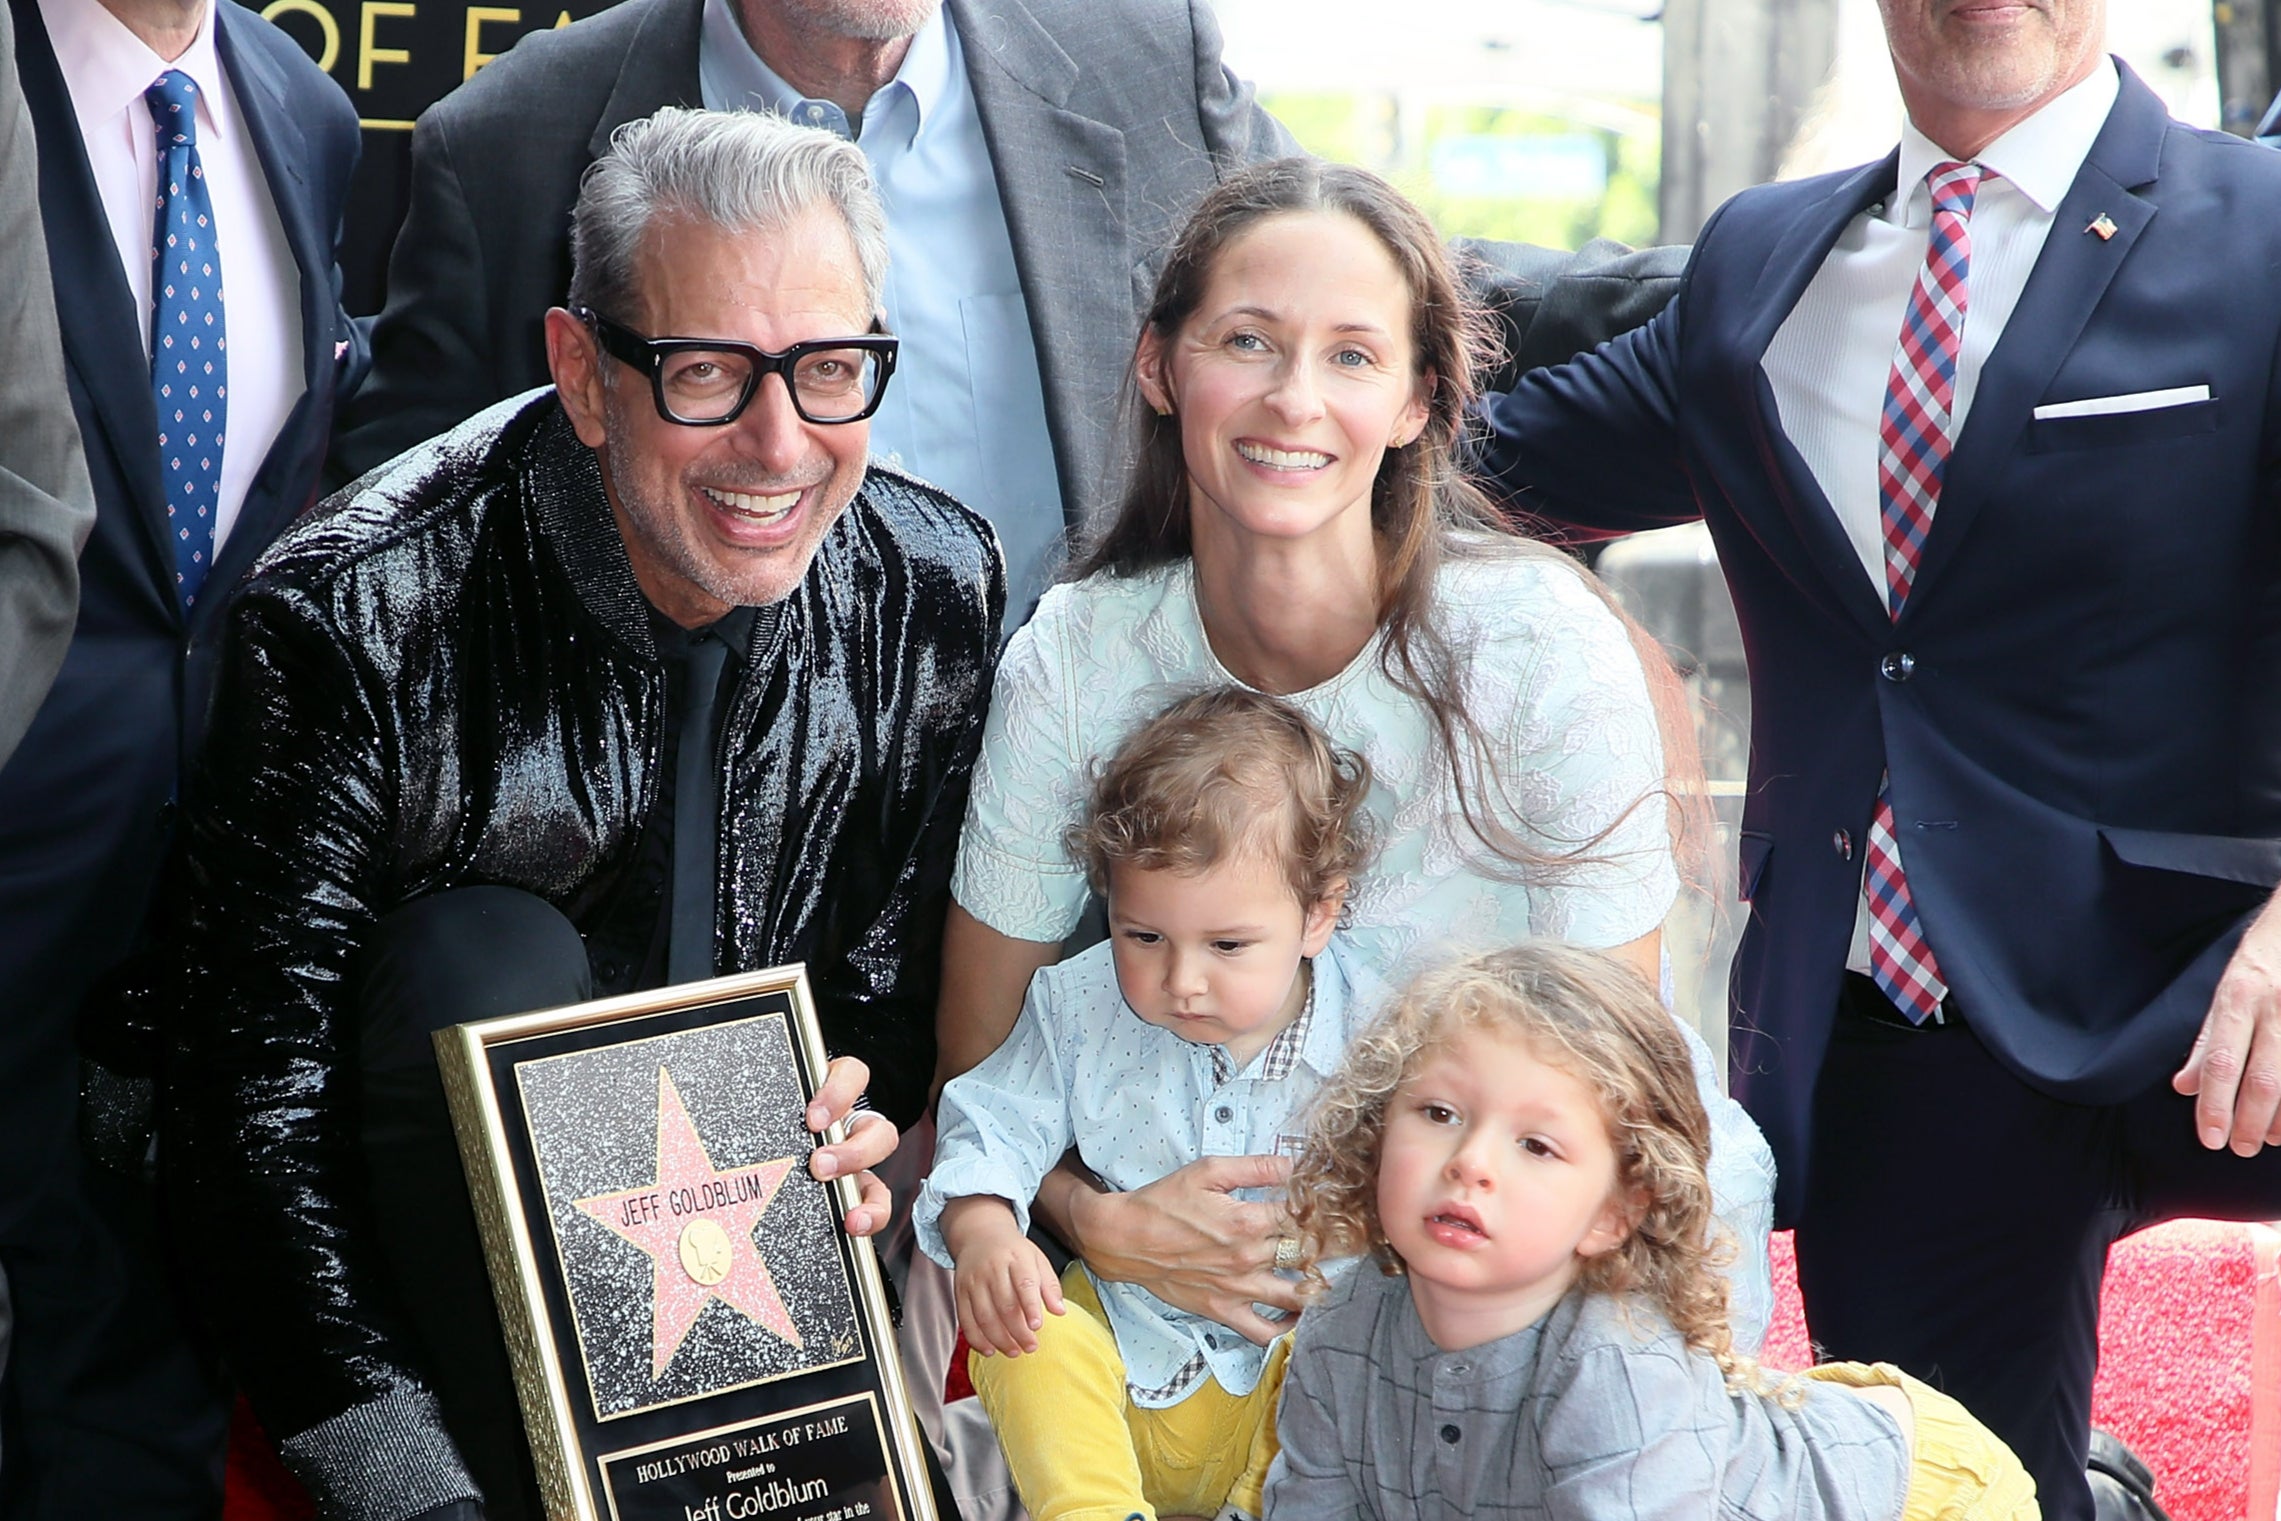 Jeff Goldblum, Emilie Livingston and their children in 2018